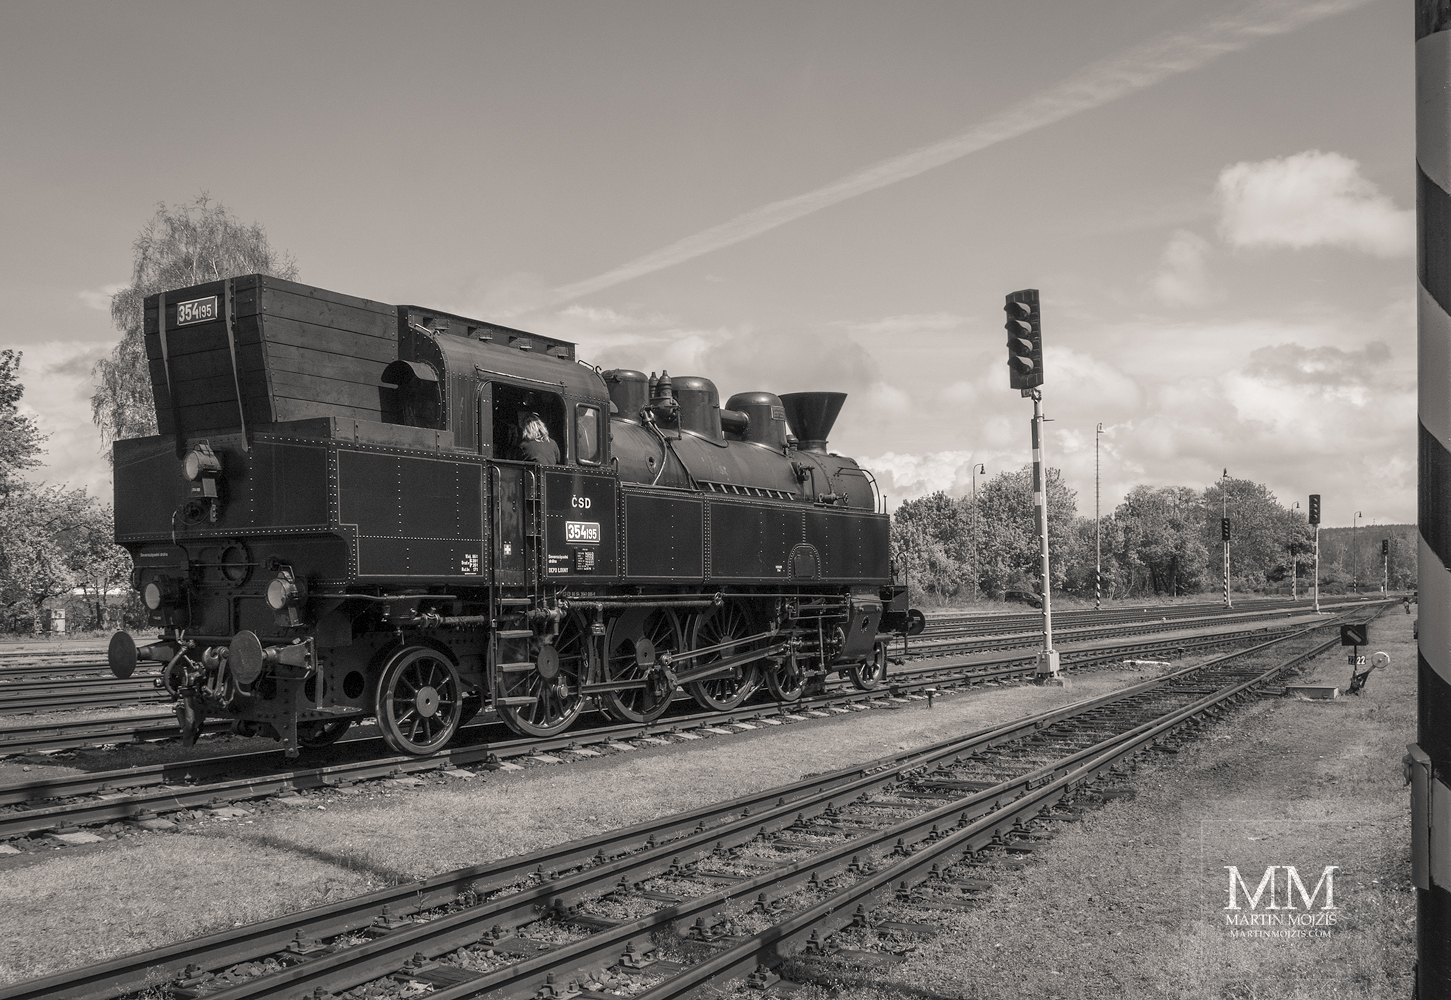 Fine Art photograph of the Czech steam locomotive no. 354 195. Martin Mojzis.